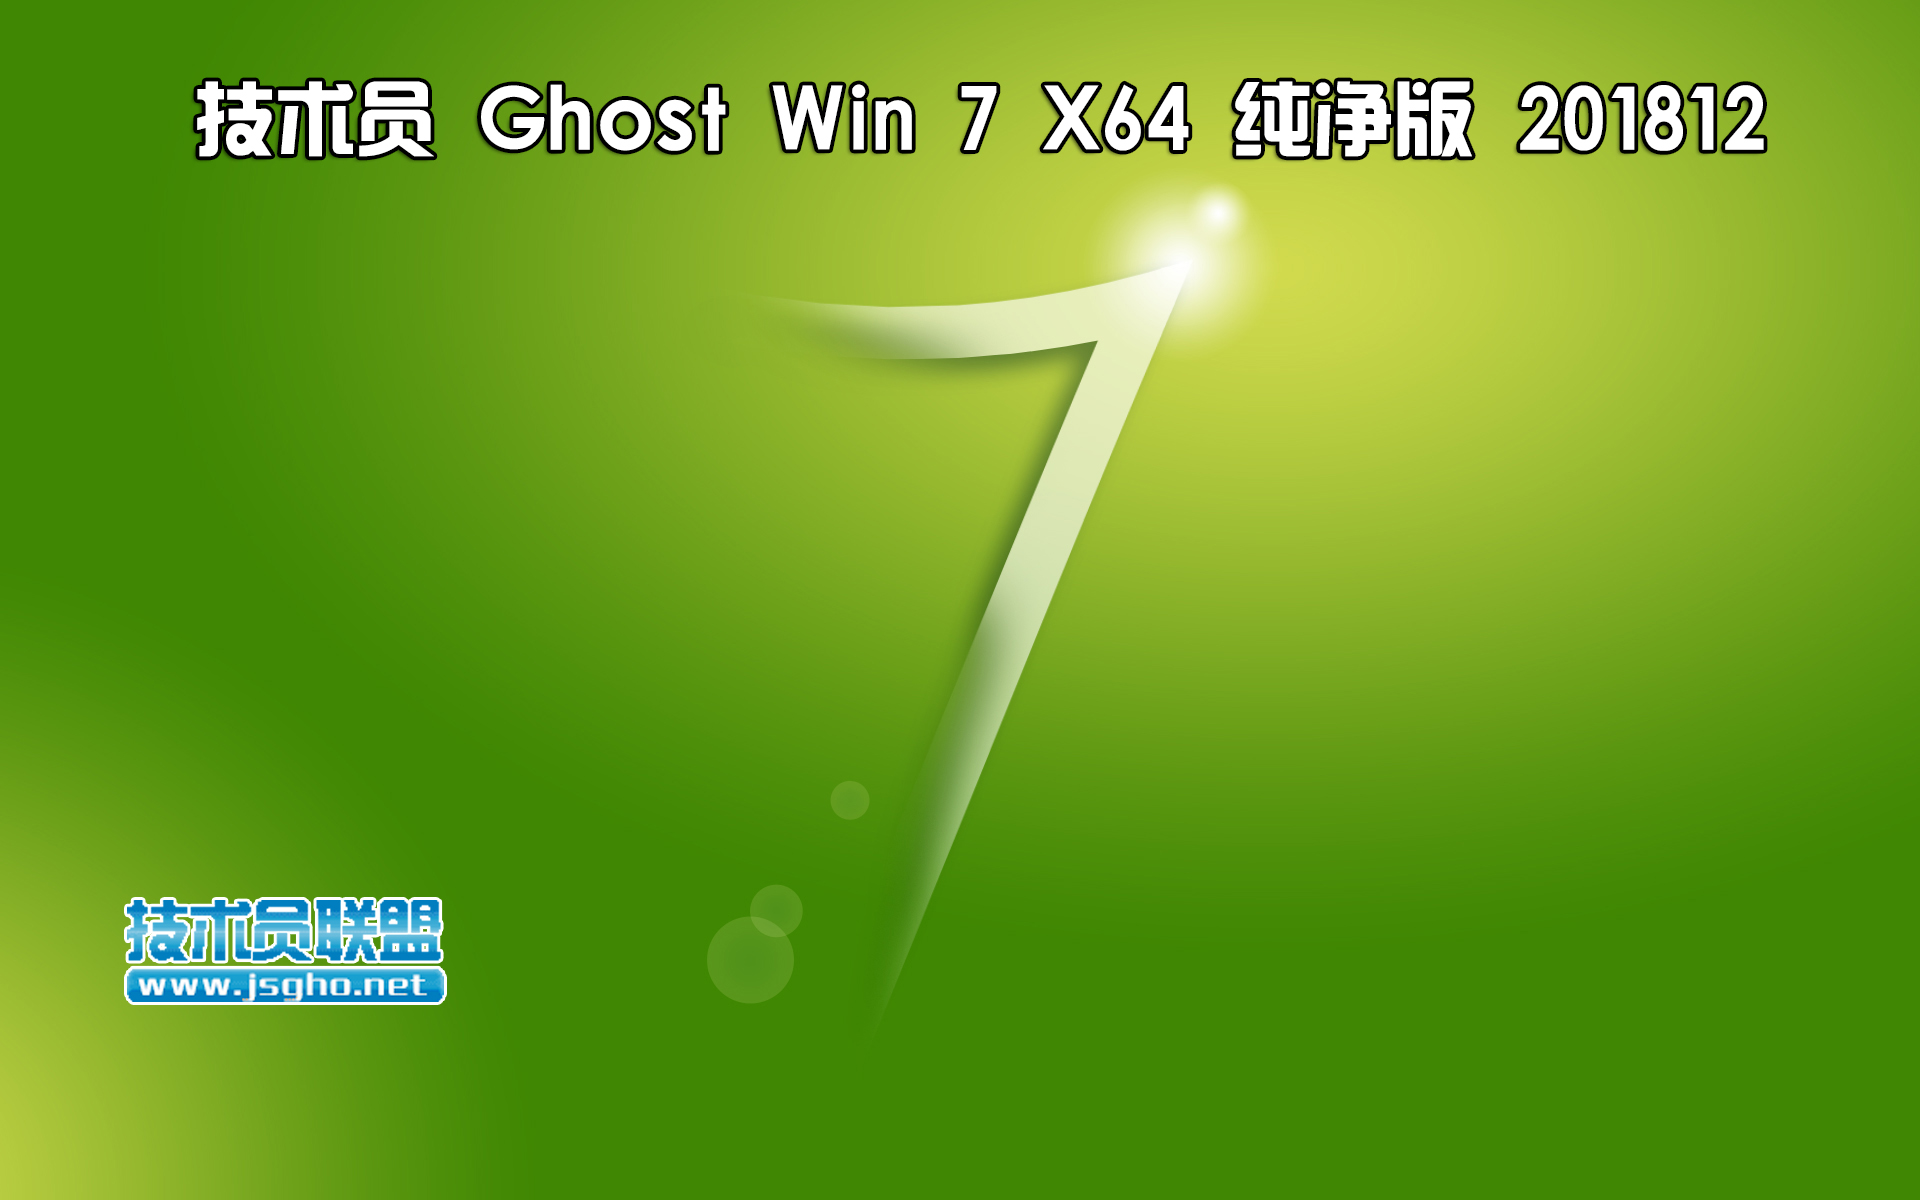 技术员 Ghost Win7 Sp1 x64 纯净版201812